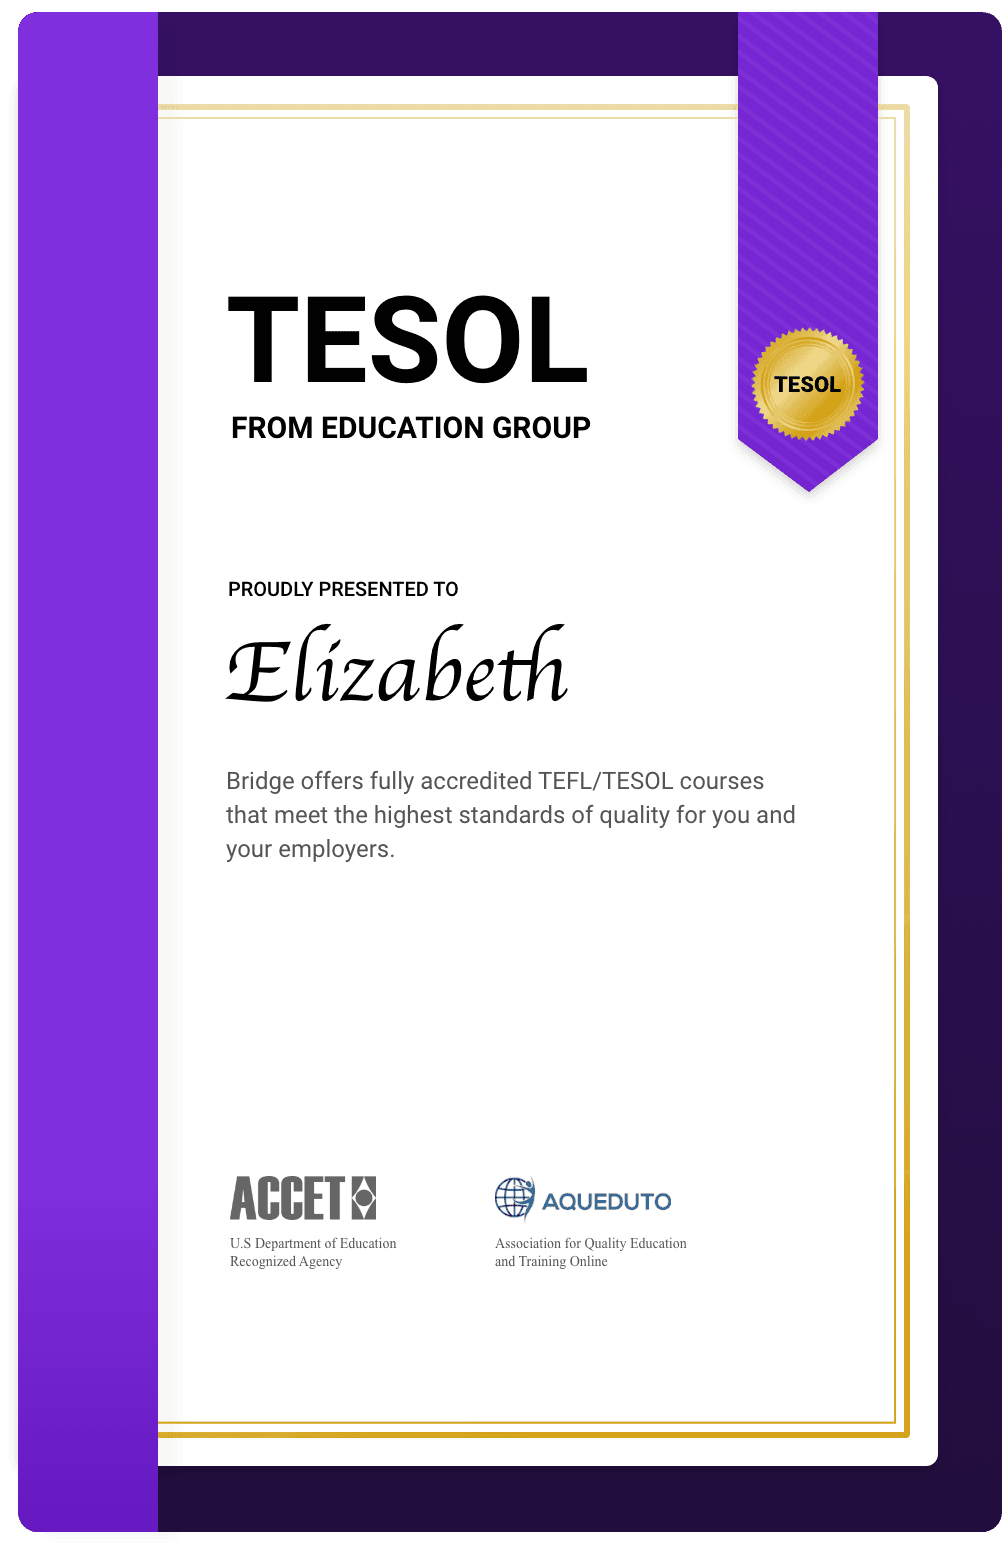 tesol certification image